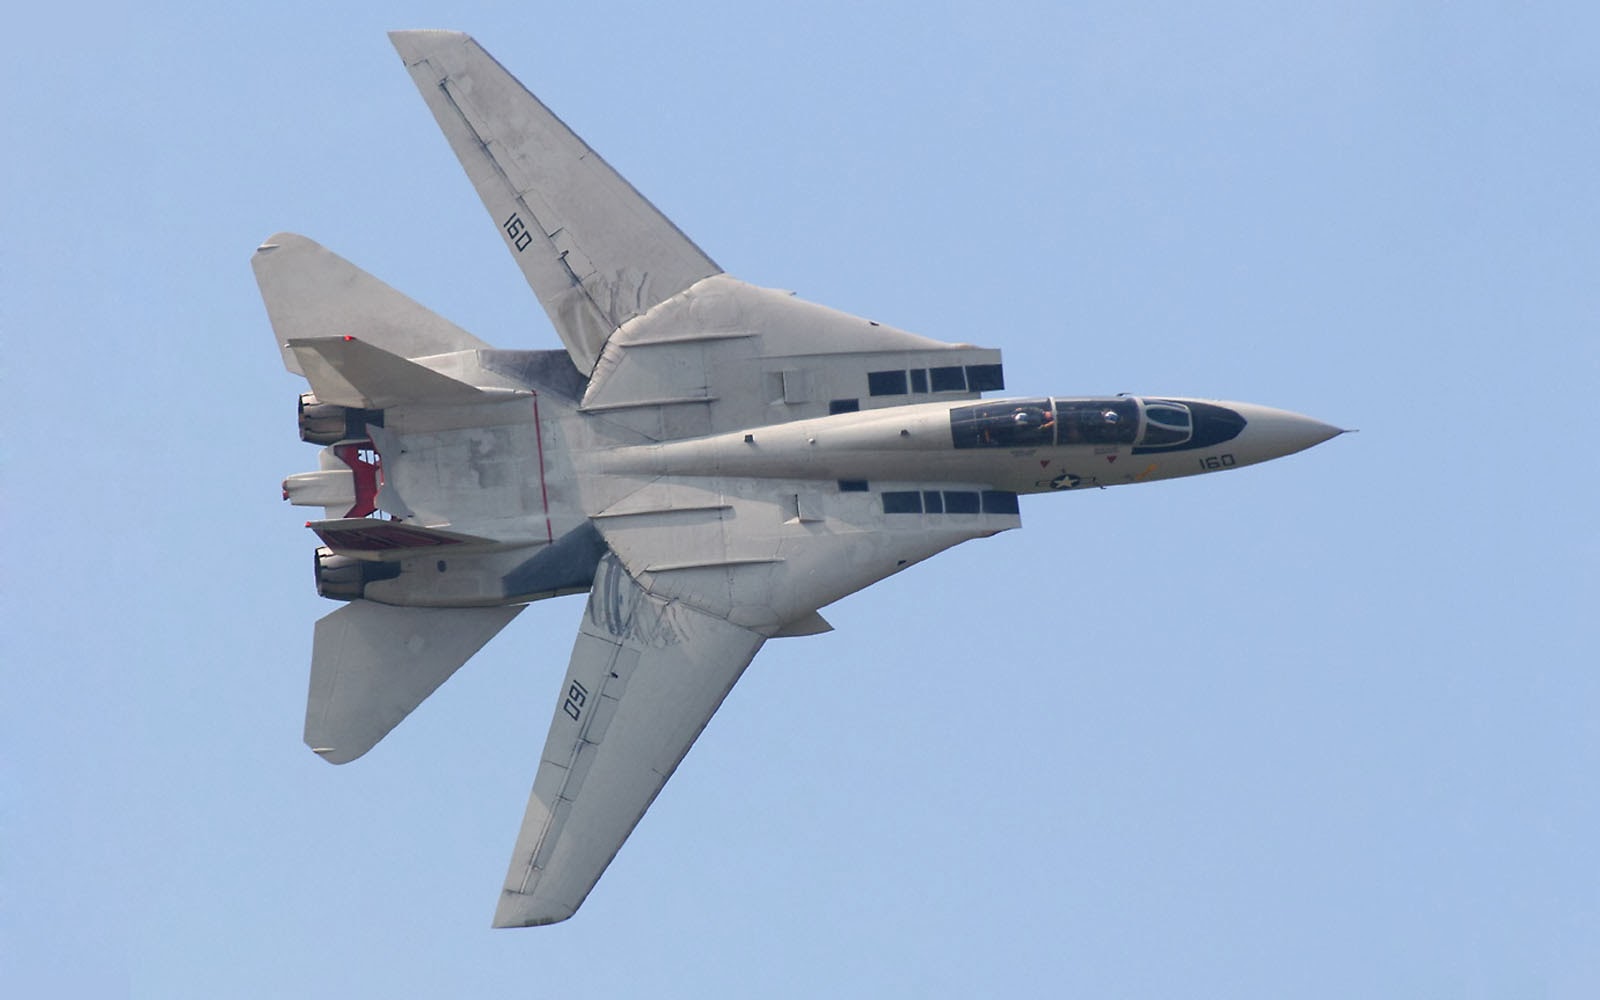 f14 wallpaper,aircraft,airplane,aviation,military aircraft,air force